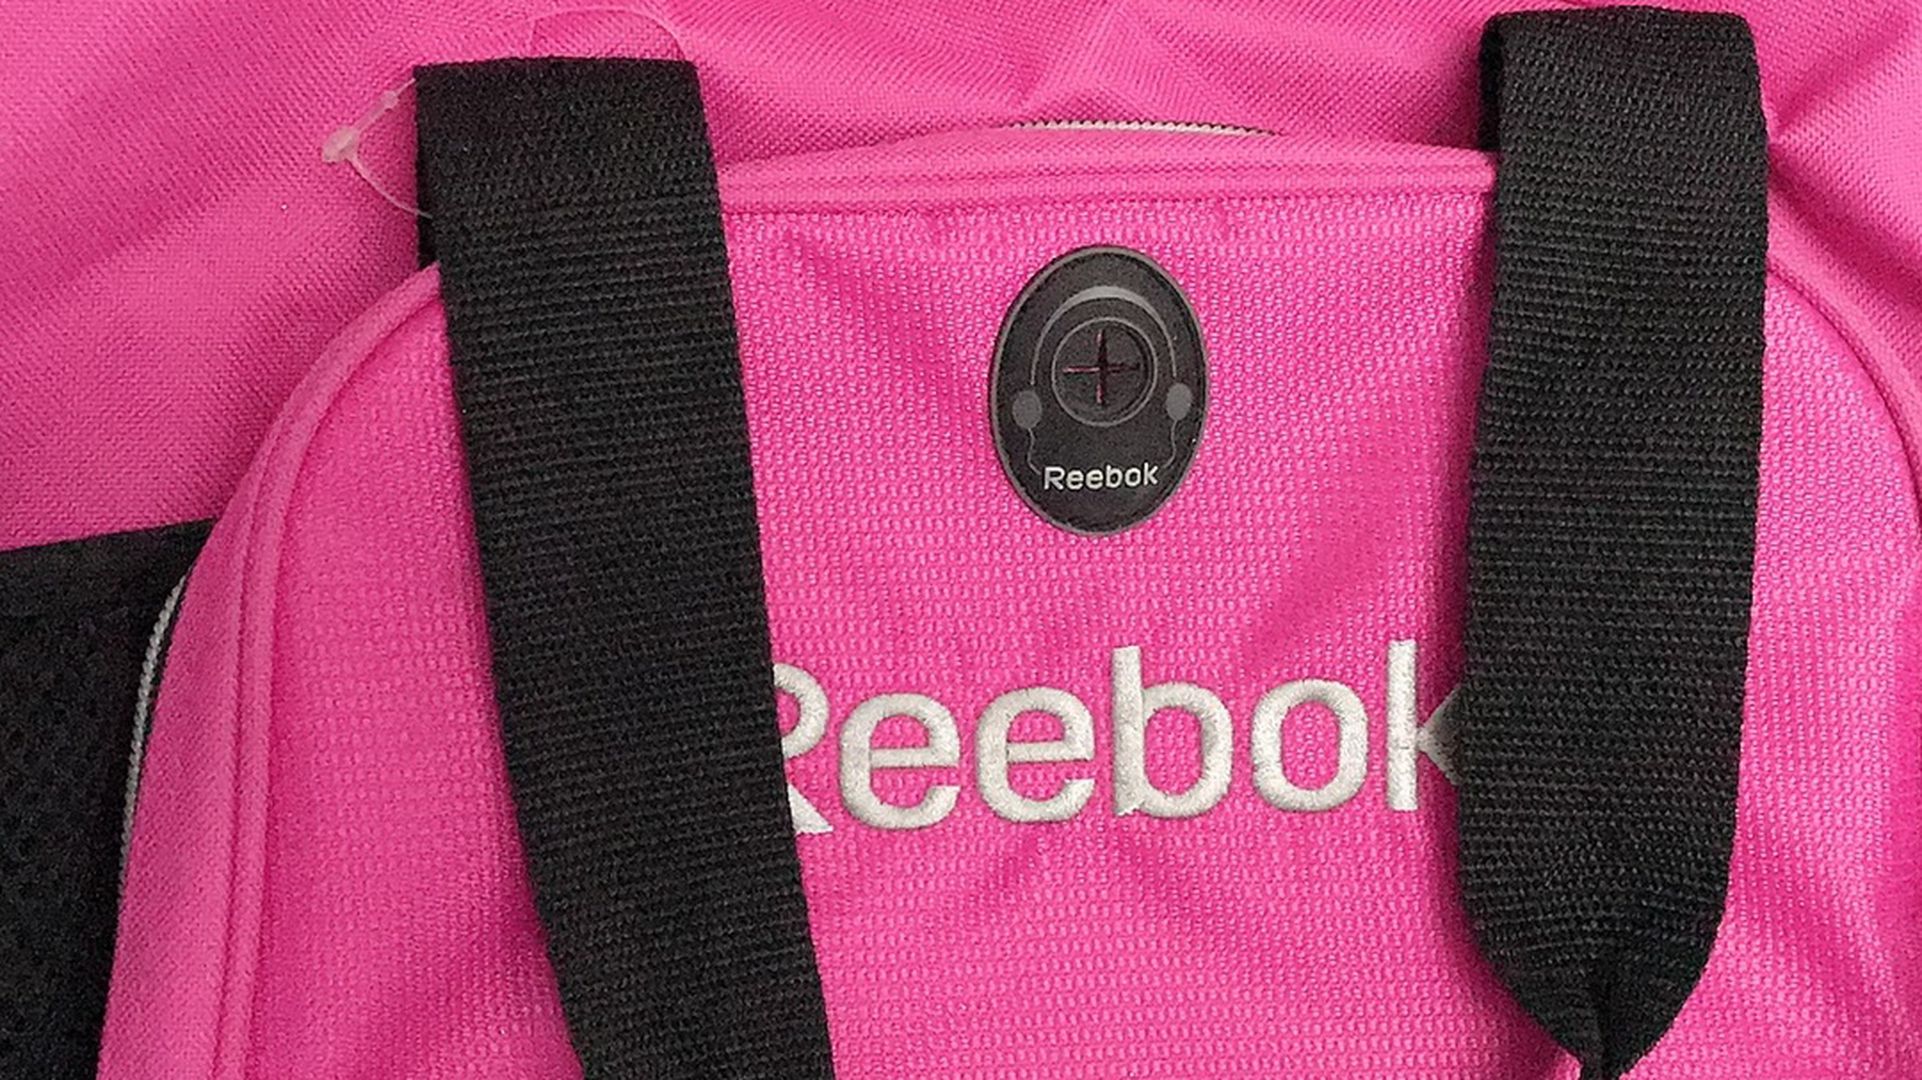 Reebok Gym / Workout / Duffle / Travel / Carryon Bag